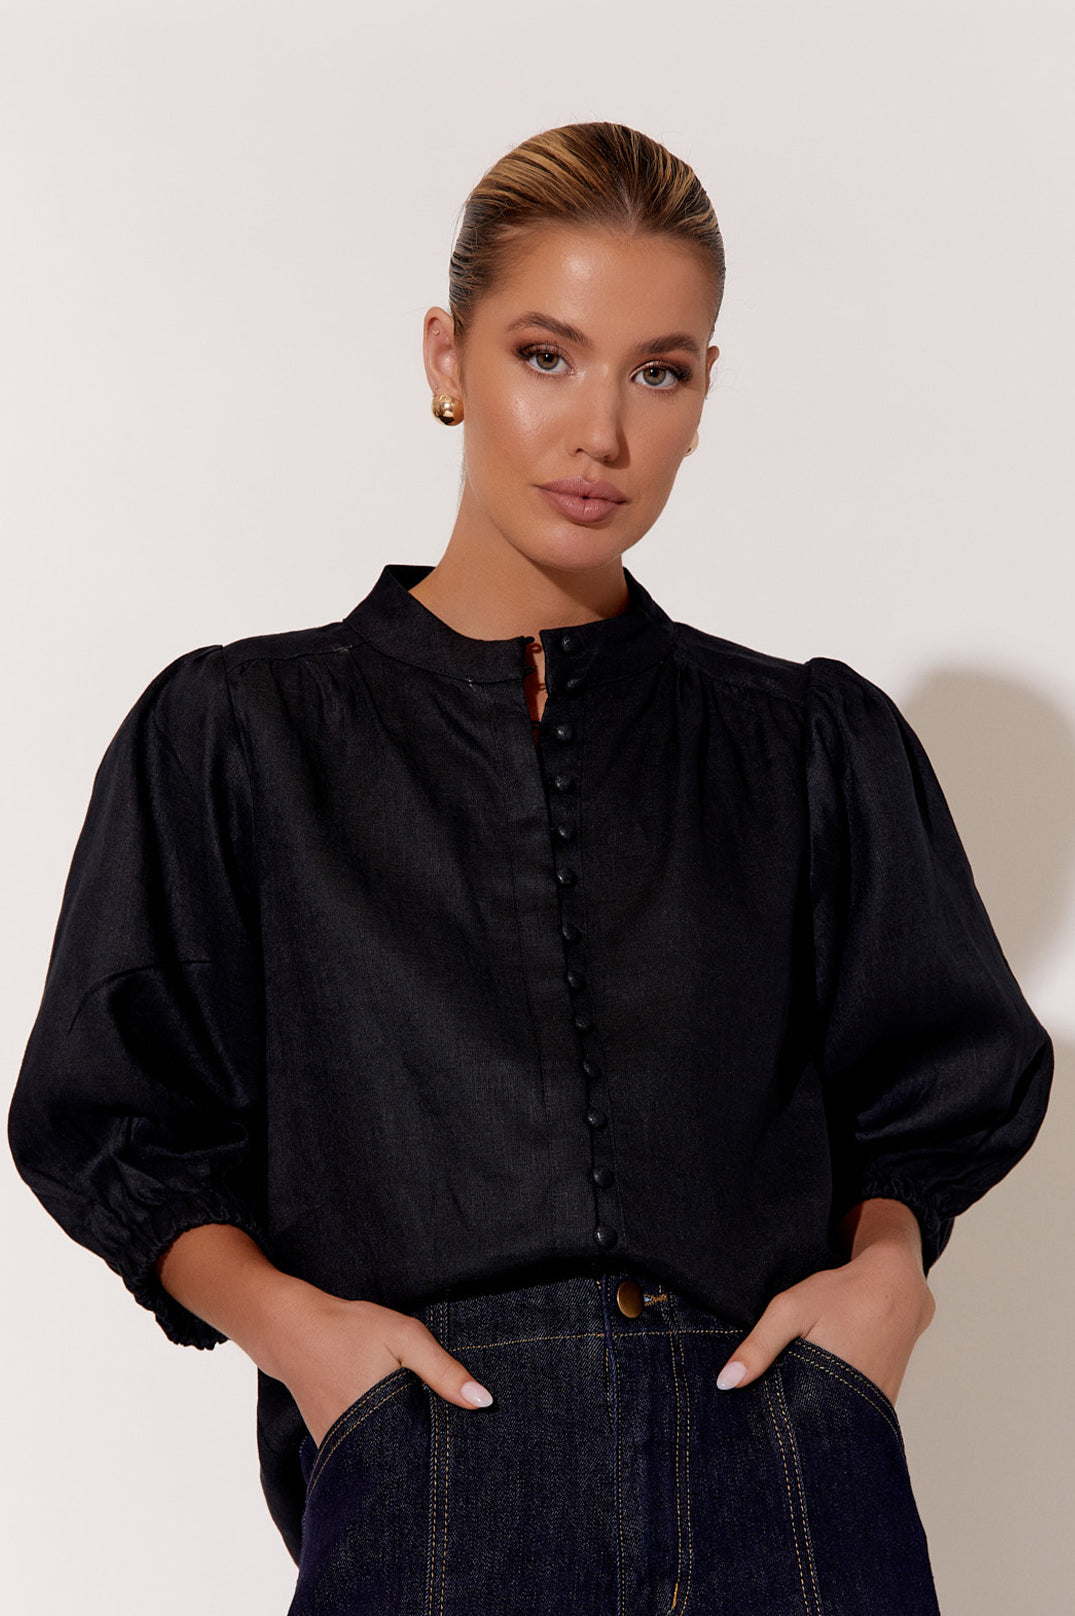 Adorne Lilian Black 3/4 Sleeve Shirt - Black